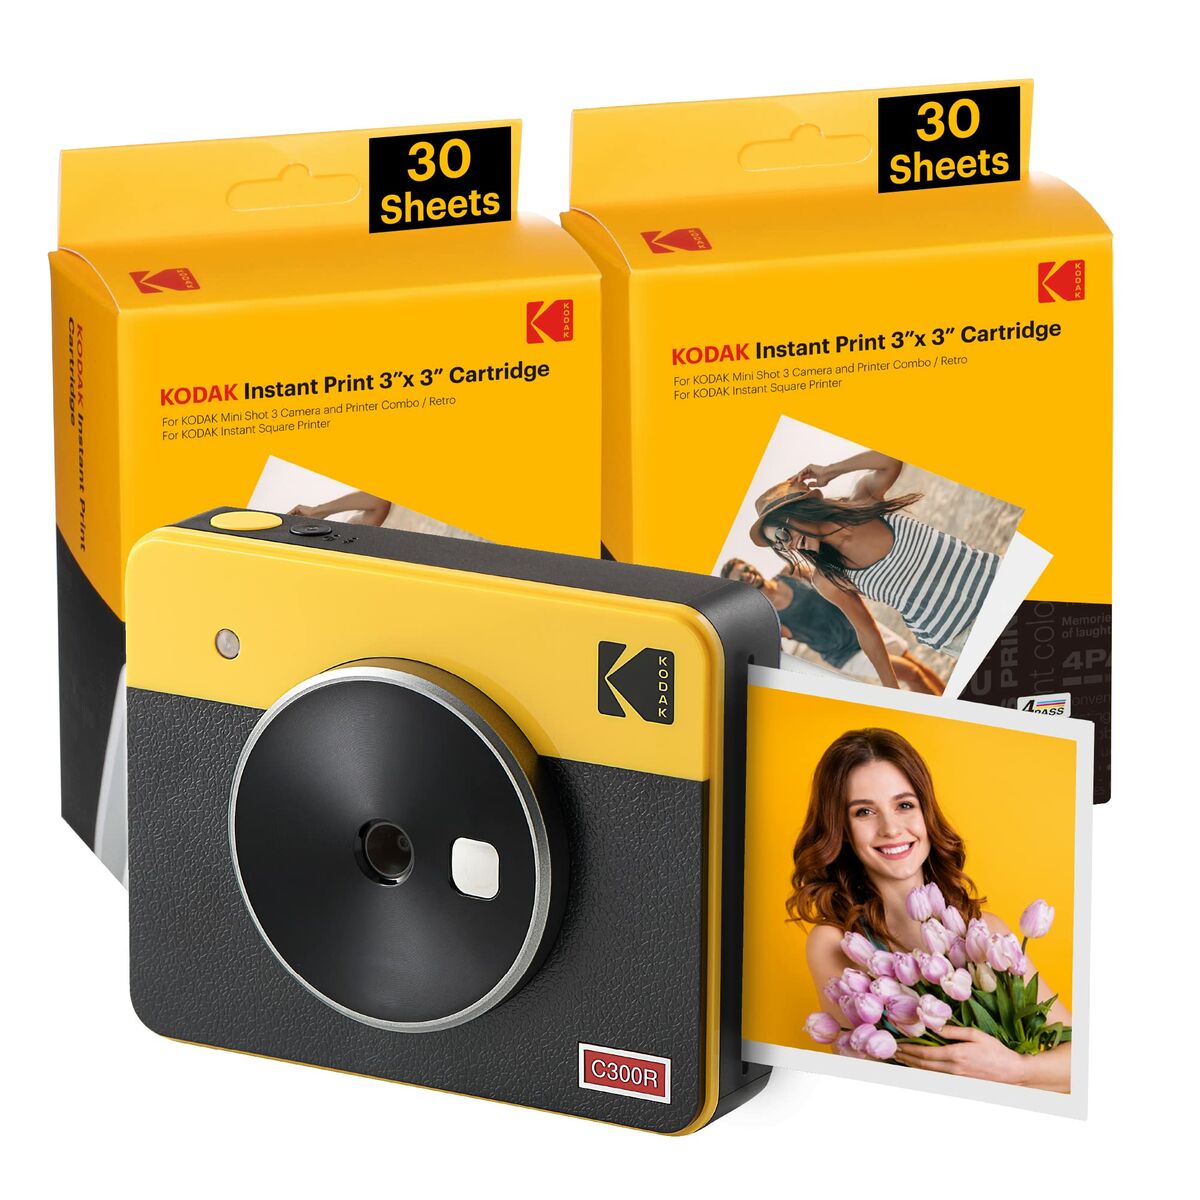 Instant camera Kodak MINI SHOT 3 RETRO C300RY60 Yellow, Kodak, Electronics, Photography and video cameras, instant-camera-kodak-mini-shot-3-retro-c300ry60-yellow, Brand_Kodak, category-reference-2609, category-reference-2614, category-reference-2932, category-reference-t-19653, category-reference-t-8122, category-reference-t-8302, Condition_NEW, deportista / en forma, entertainment, fotografía, Price_100 - 200, travel, RiotNook